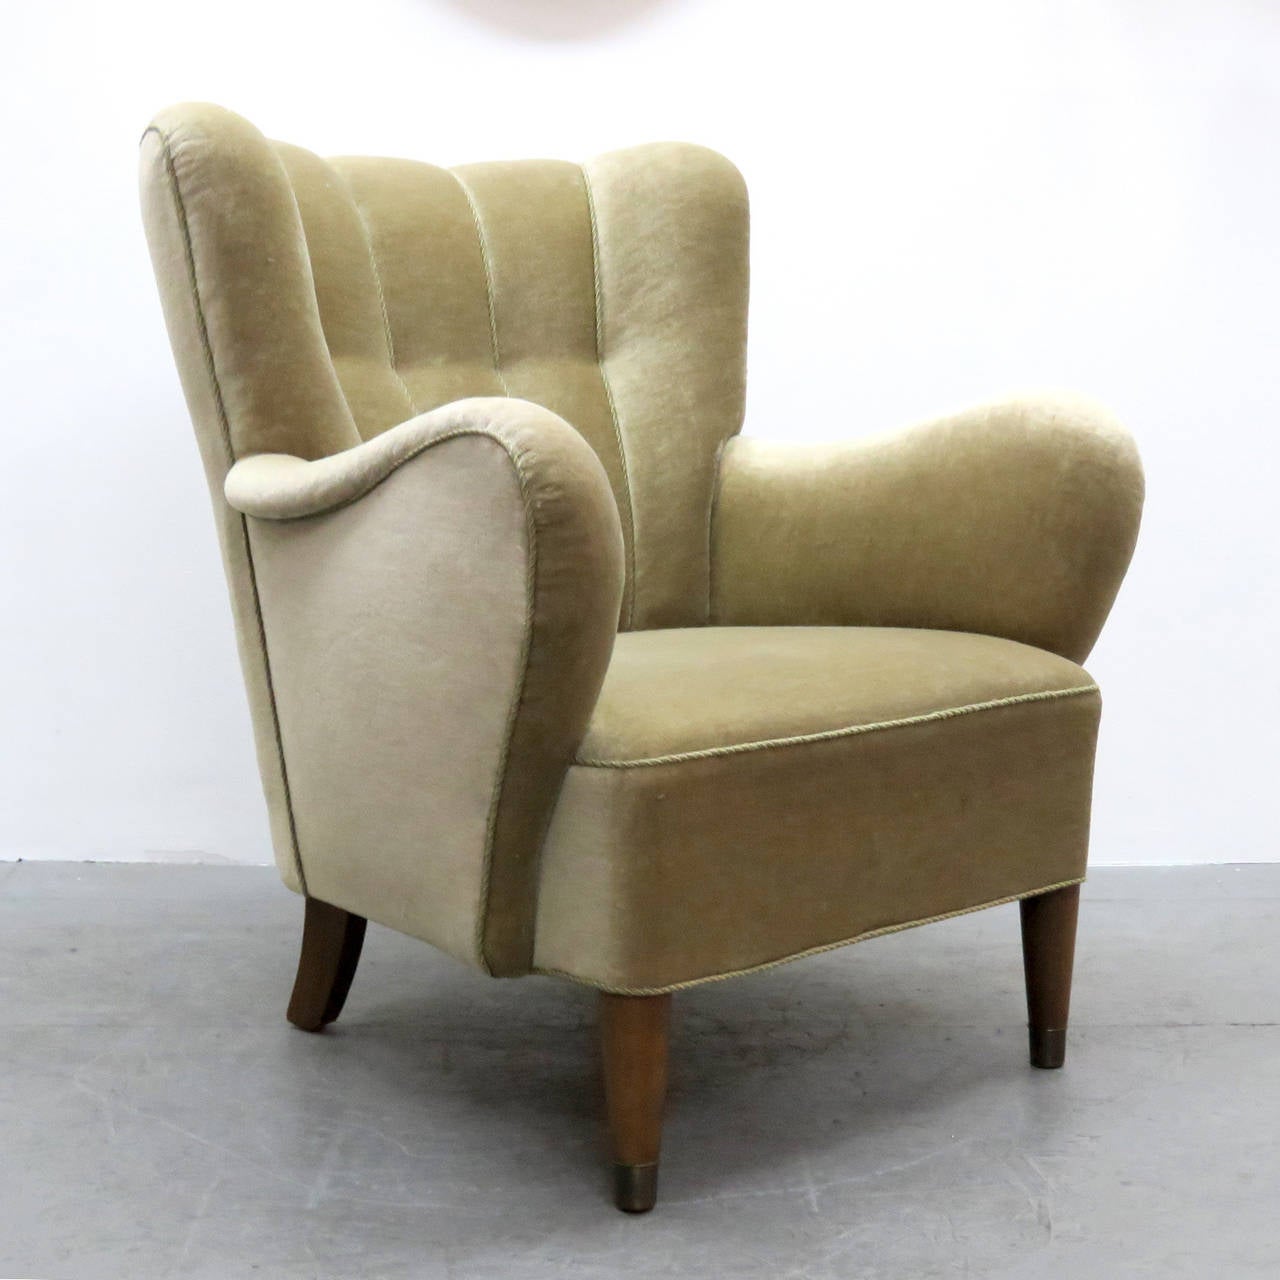 Mid-20th Century Danish Mohair Club Chair, 1950